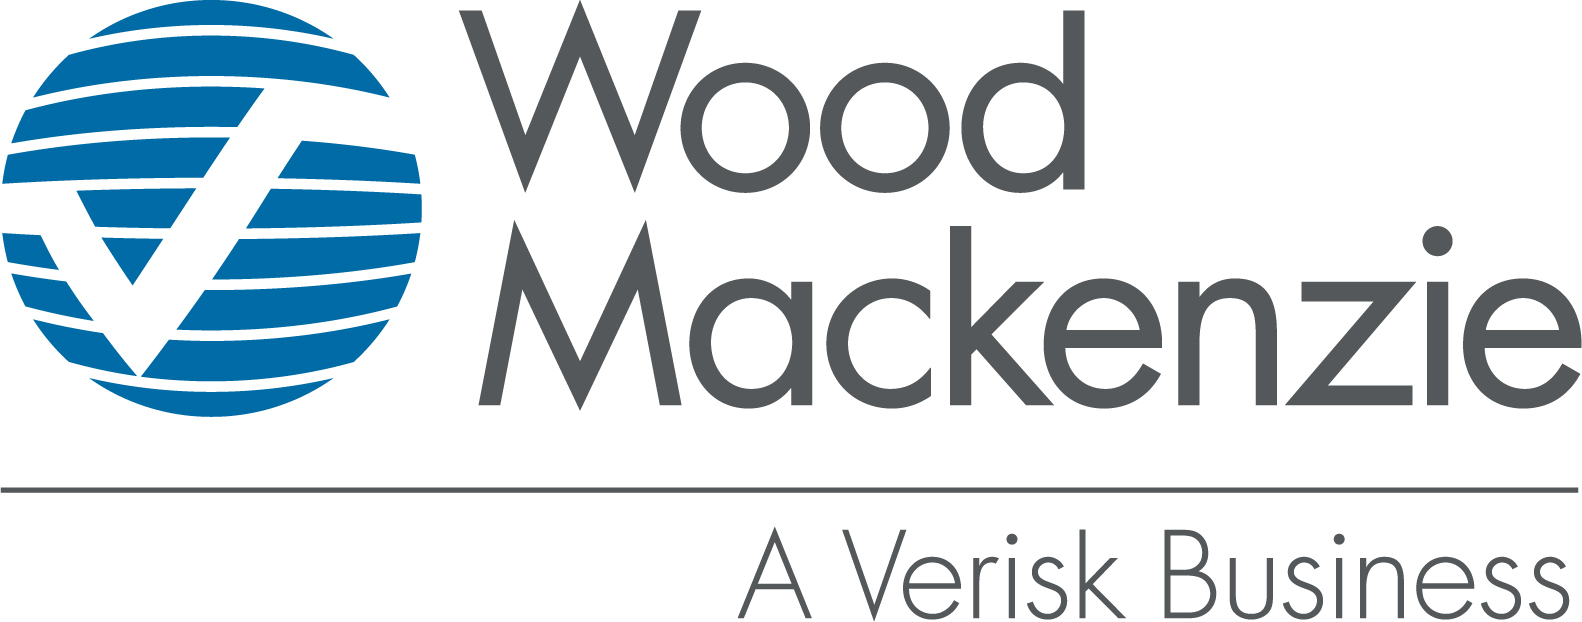 woodmac logo